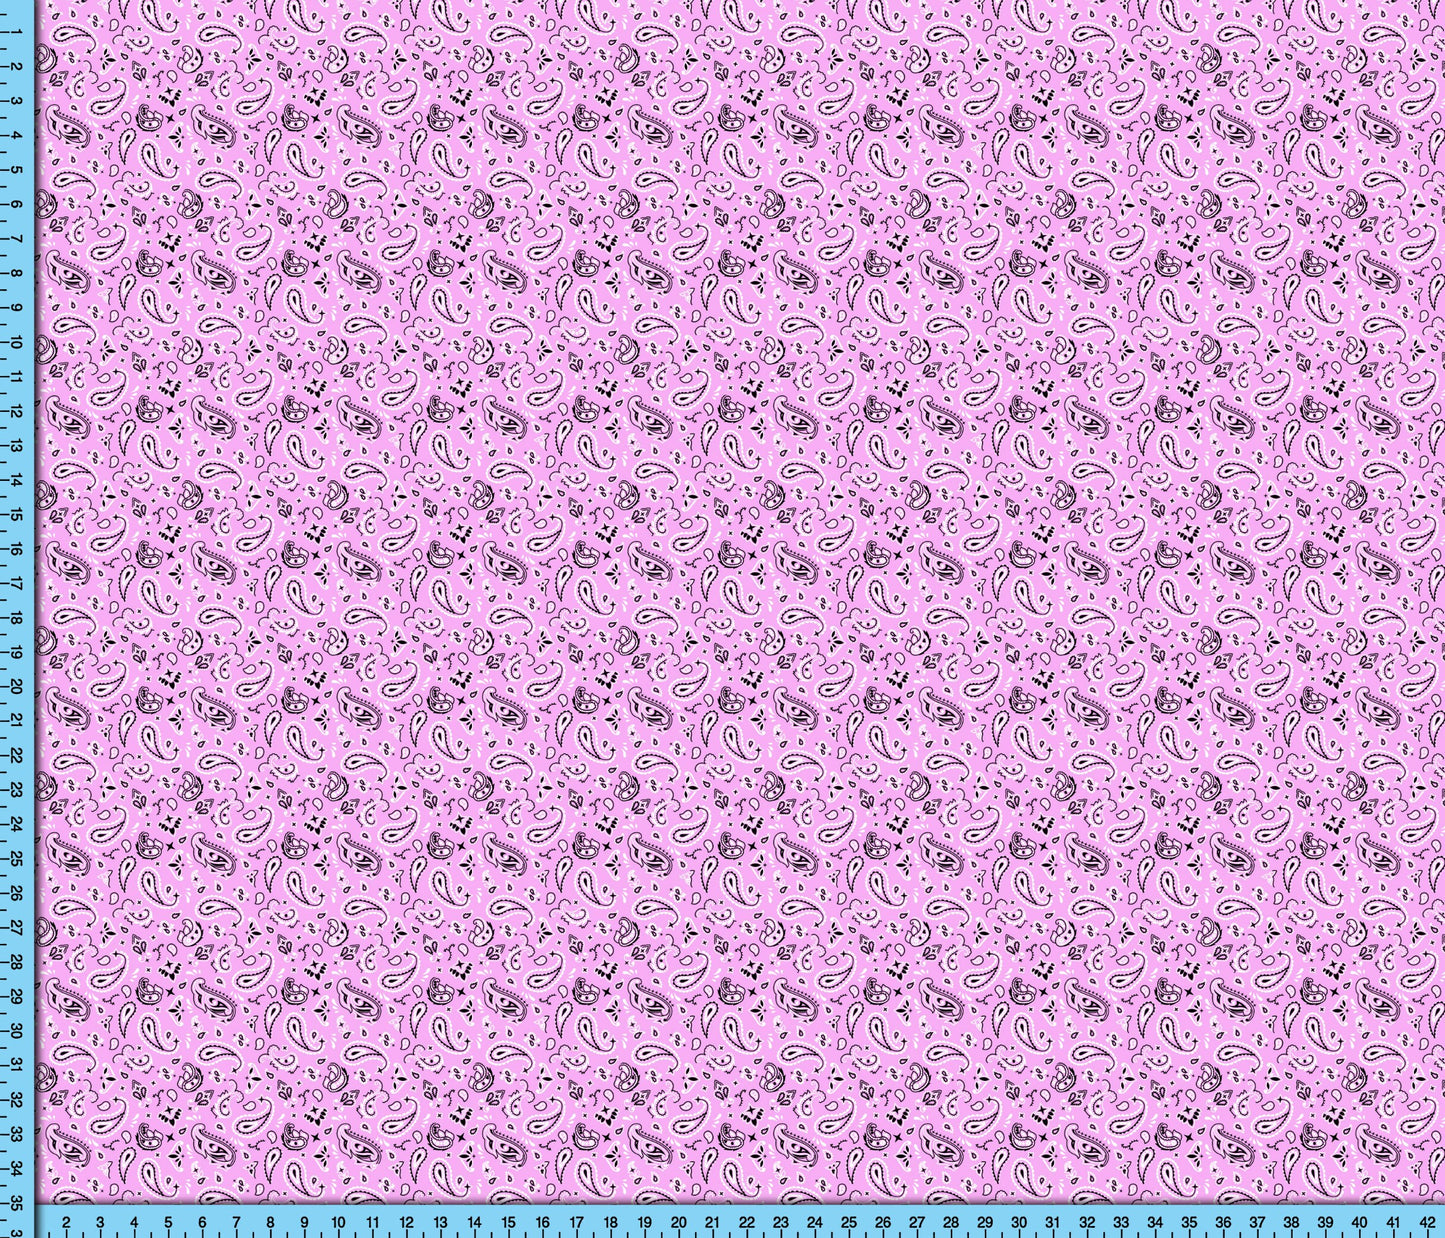 Pink Paisley Fabric Print, Boho Cowgirl Bandana Design By the Yard, Half Yard or Fat Quarter Yard